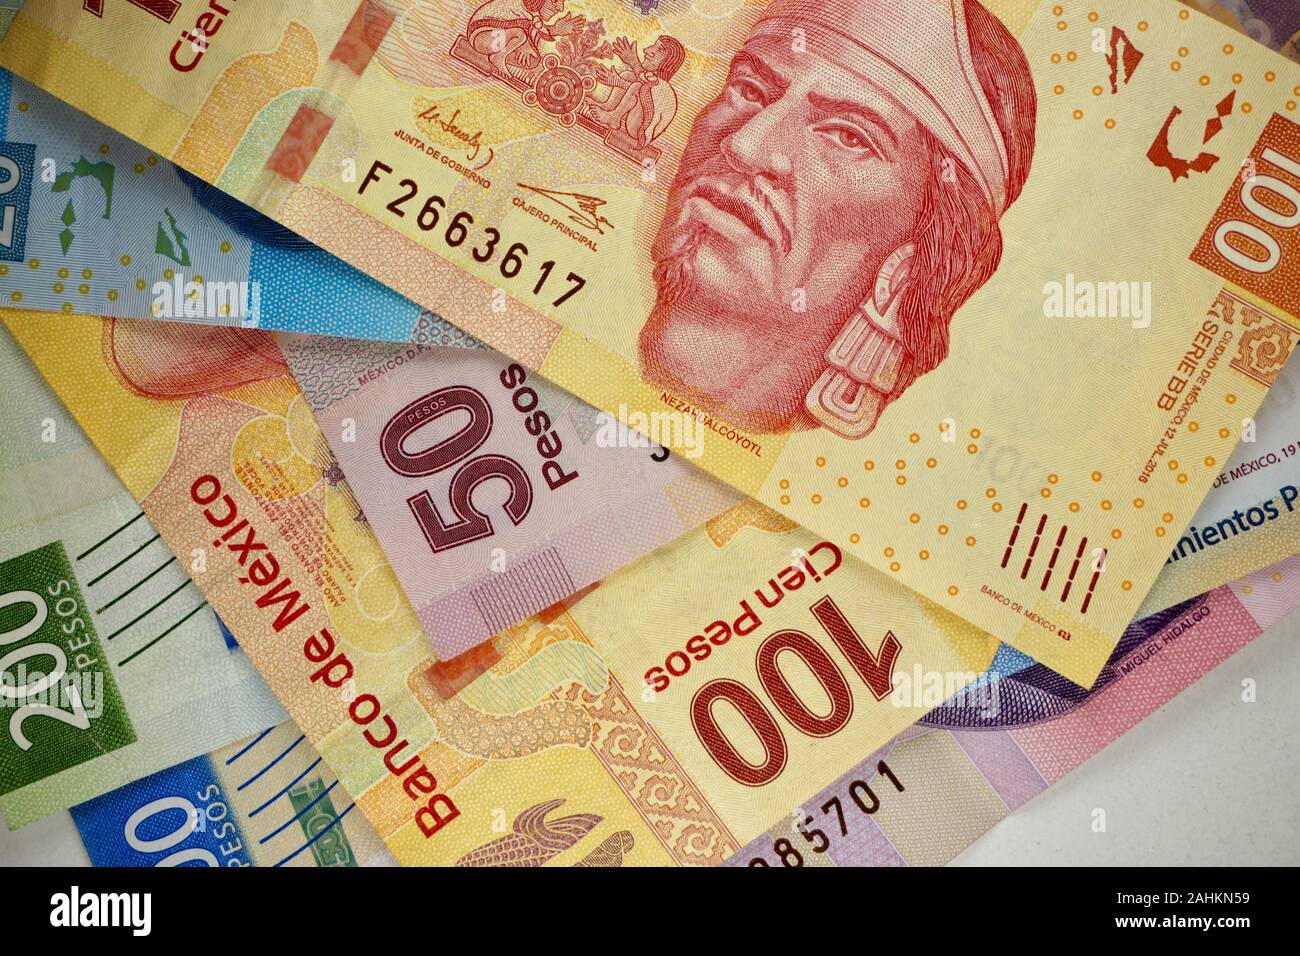 Many mexican pesos bills spread randomly over a flat surface Stock Photo